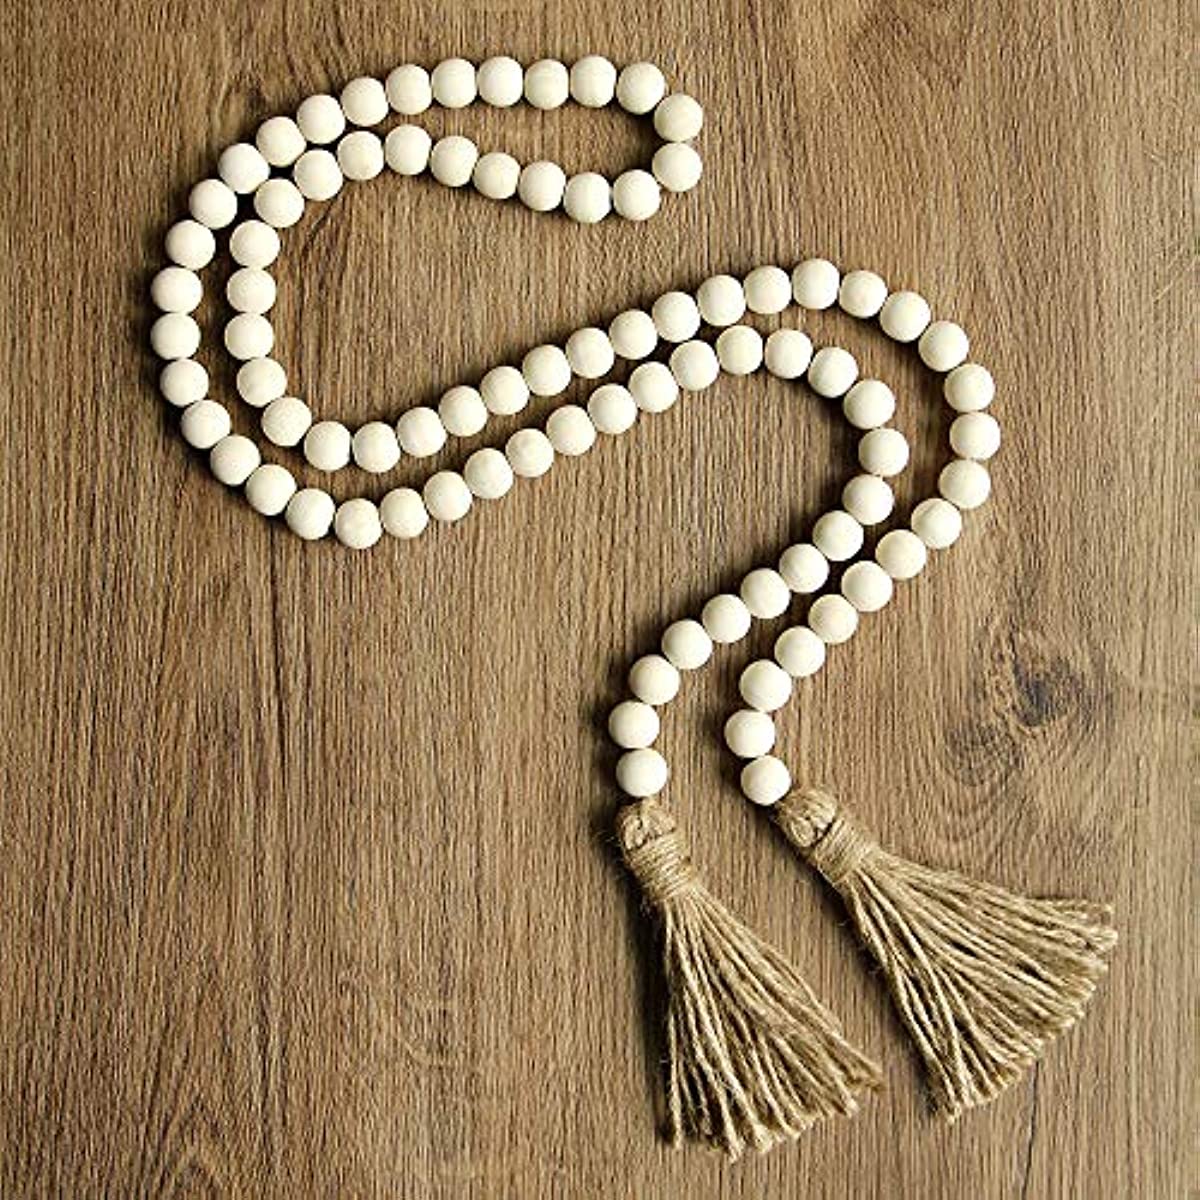 Wooden Bead Garland, 1/2 Beads, 44 Natural